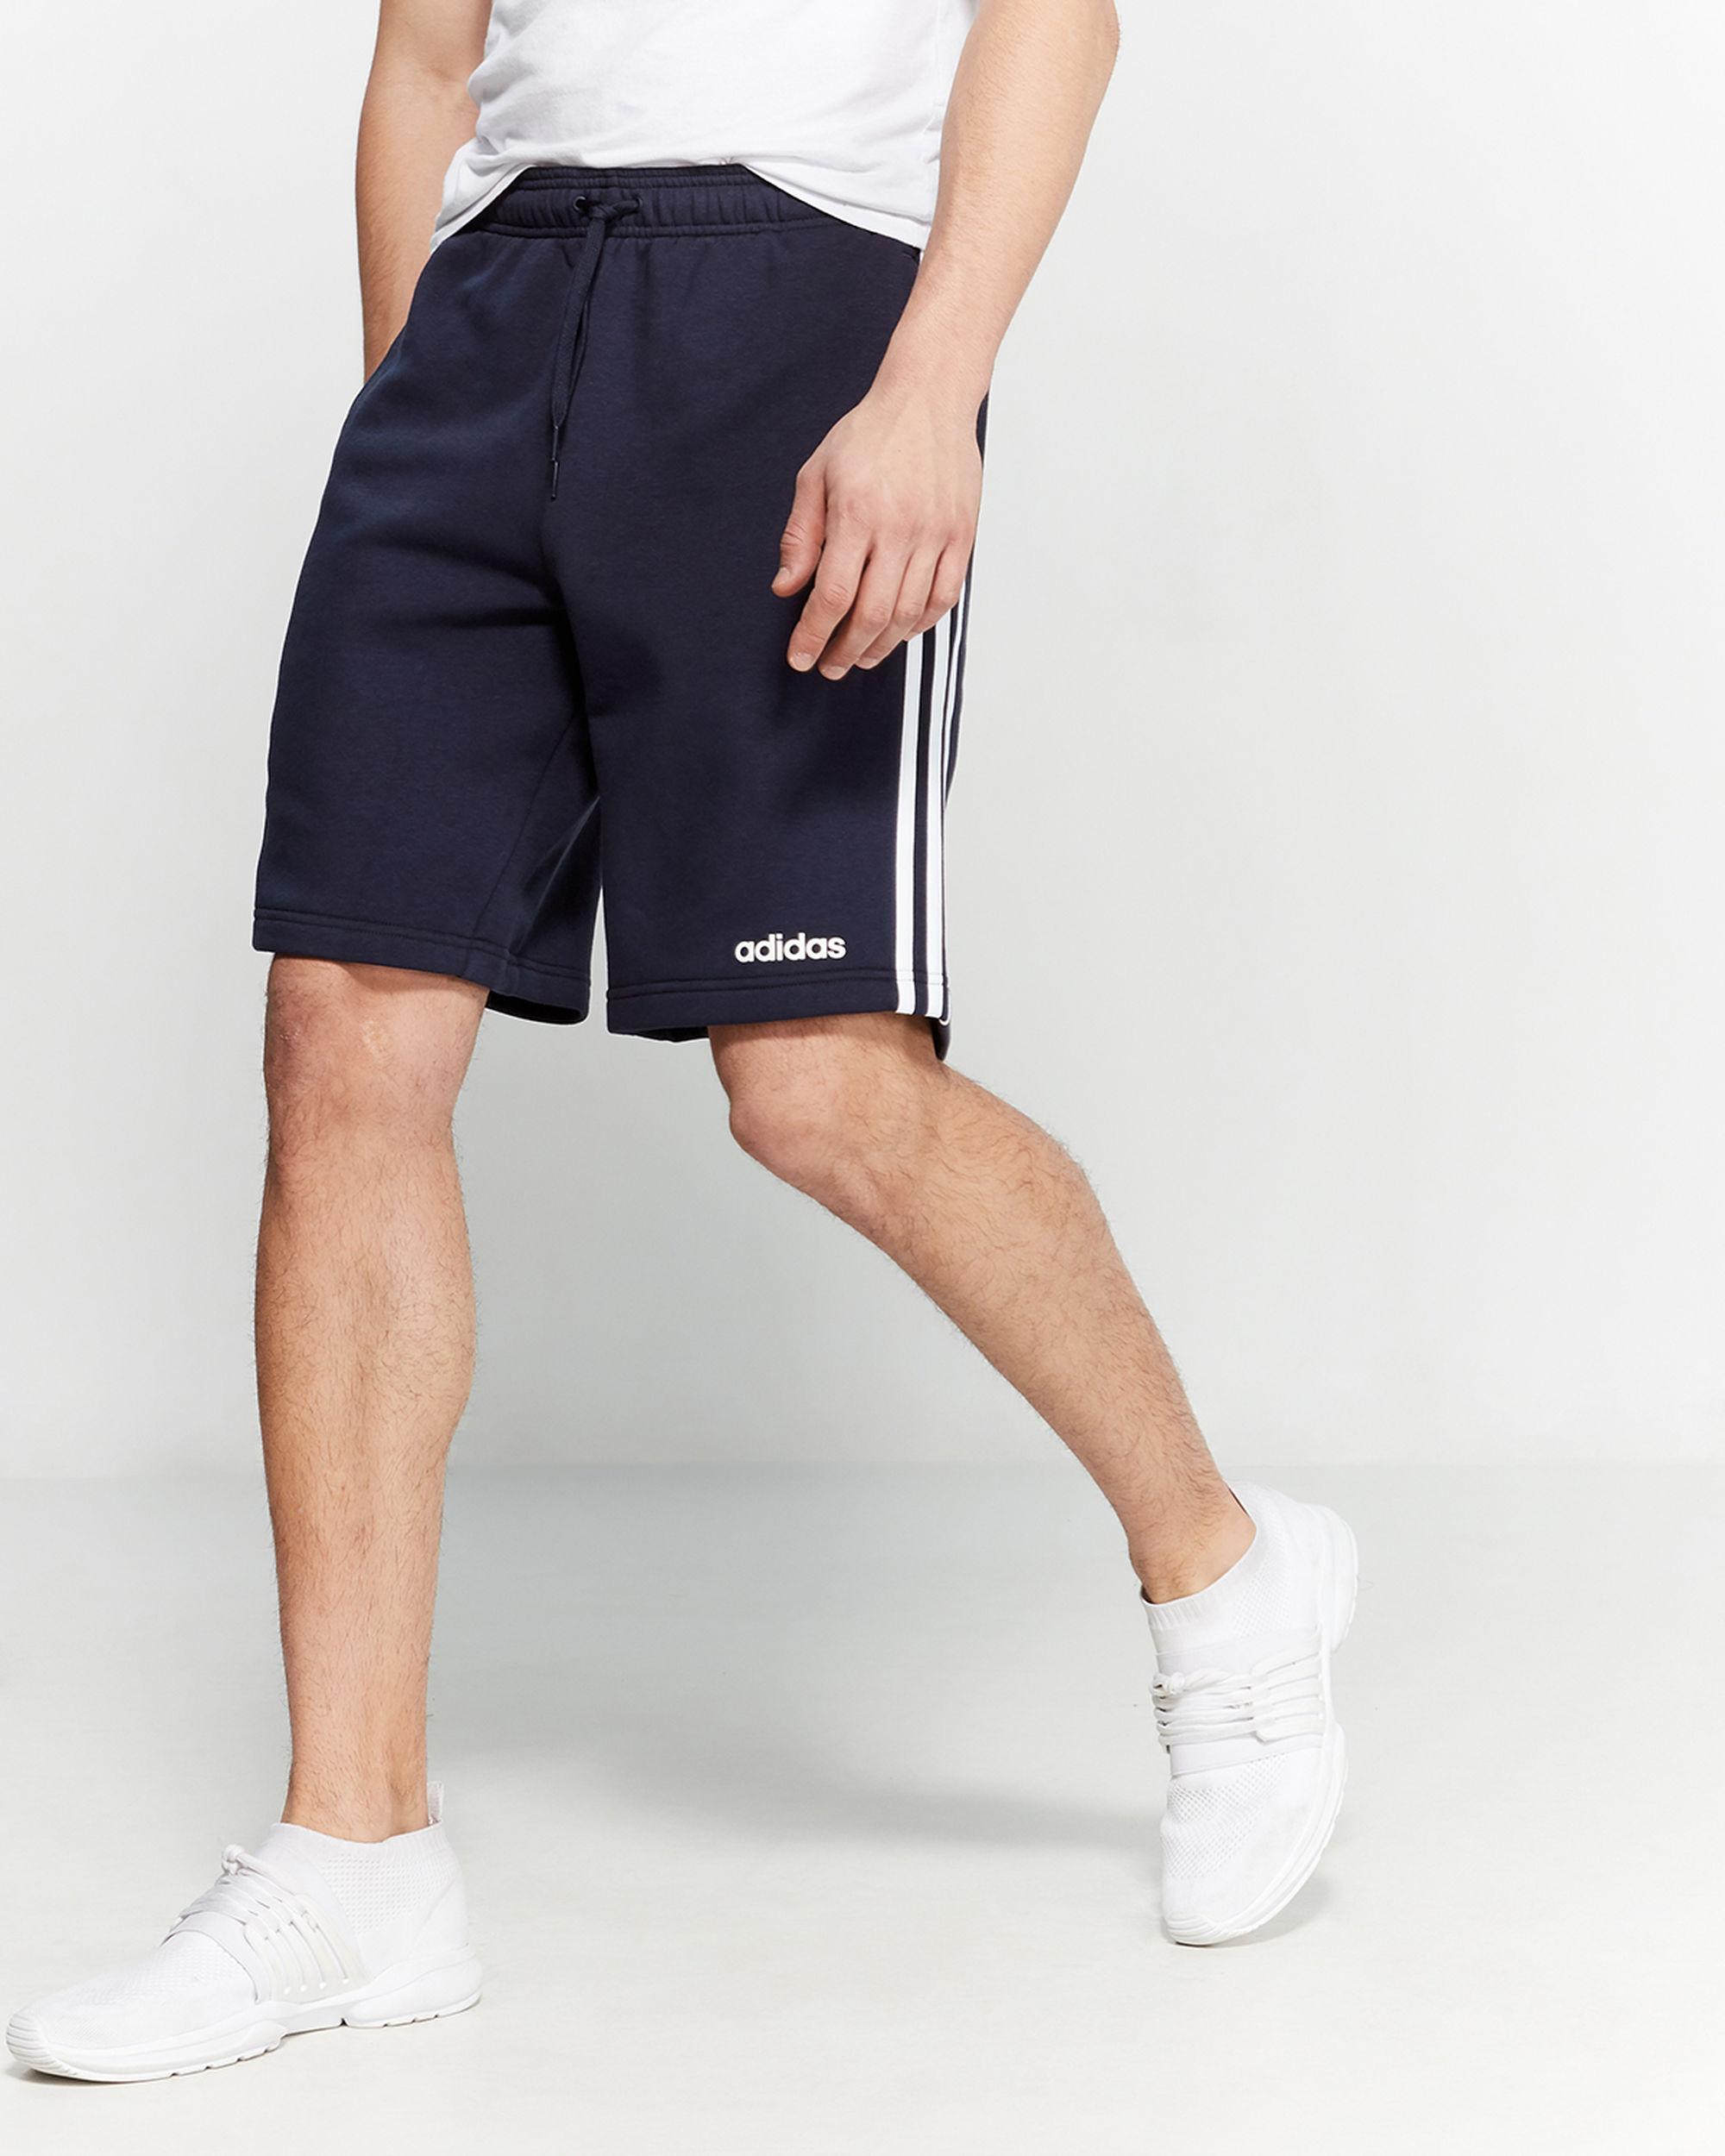 adidas Legend Ink Essential 3-stripe Fleece Shorts in Blue for Men - Lyst